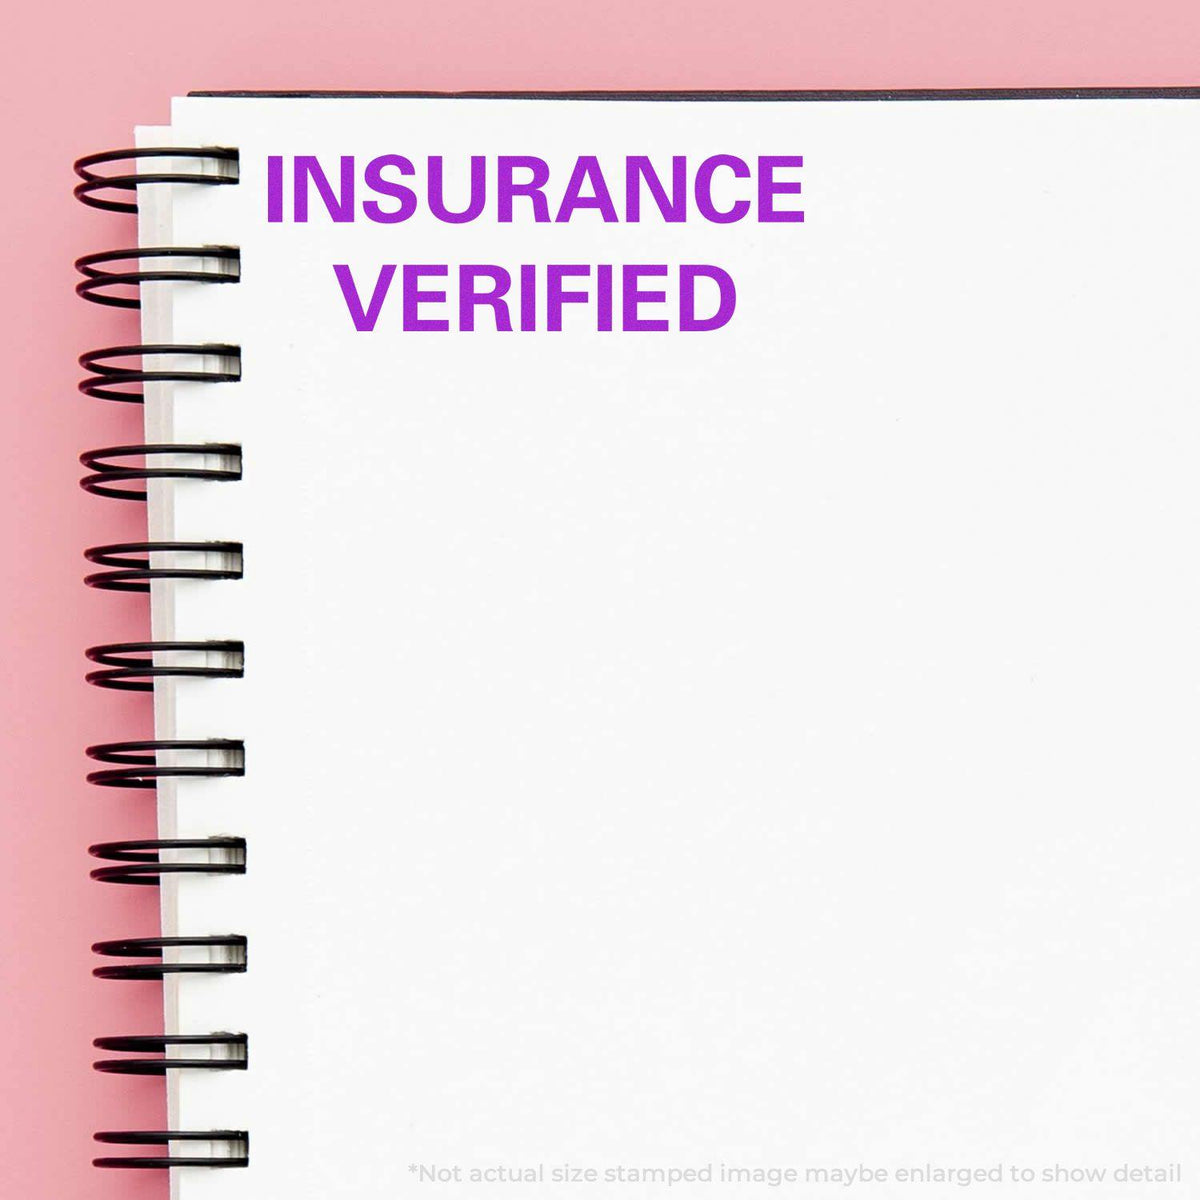 In Use Slim Pre-Inked Insurance Verified Stamp Image